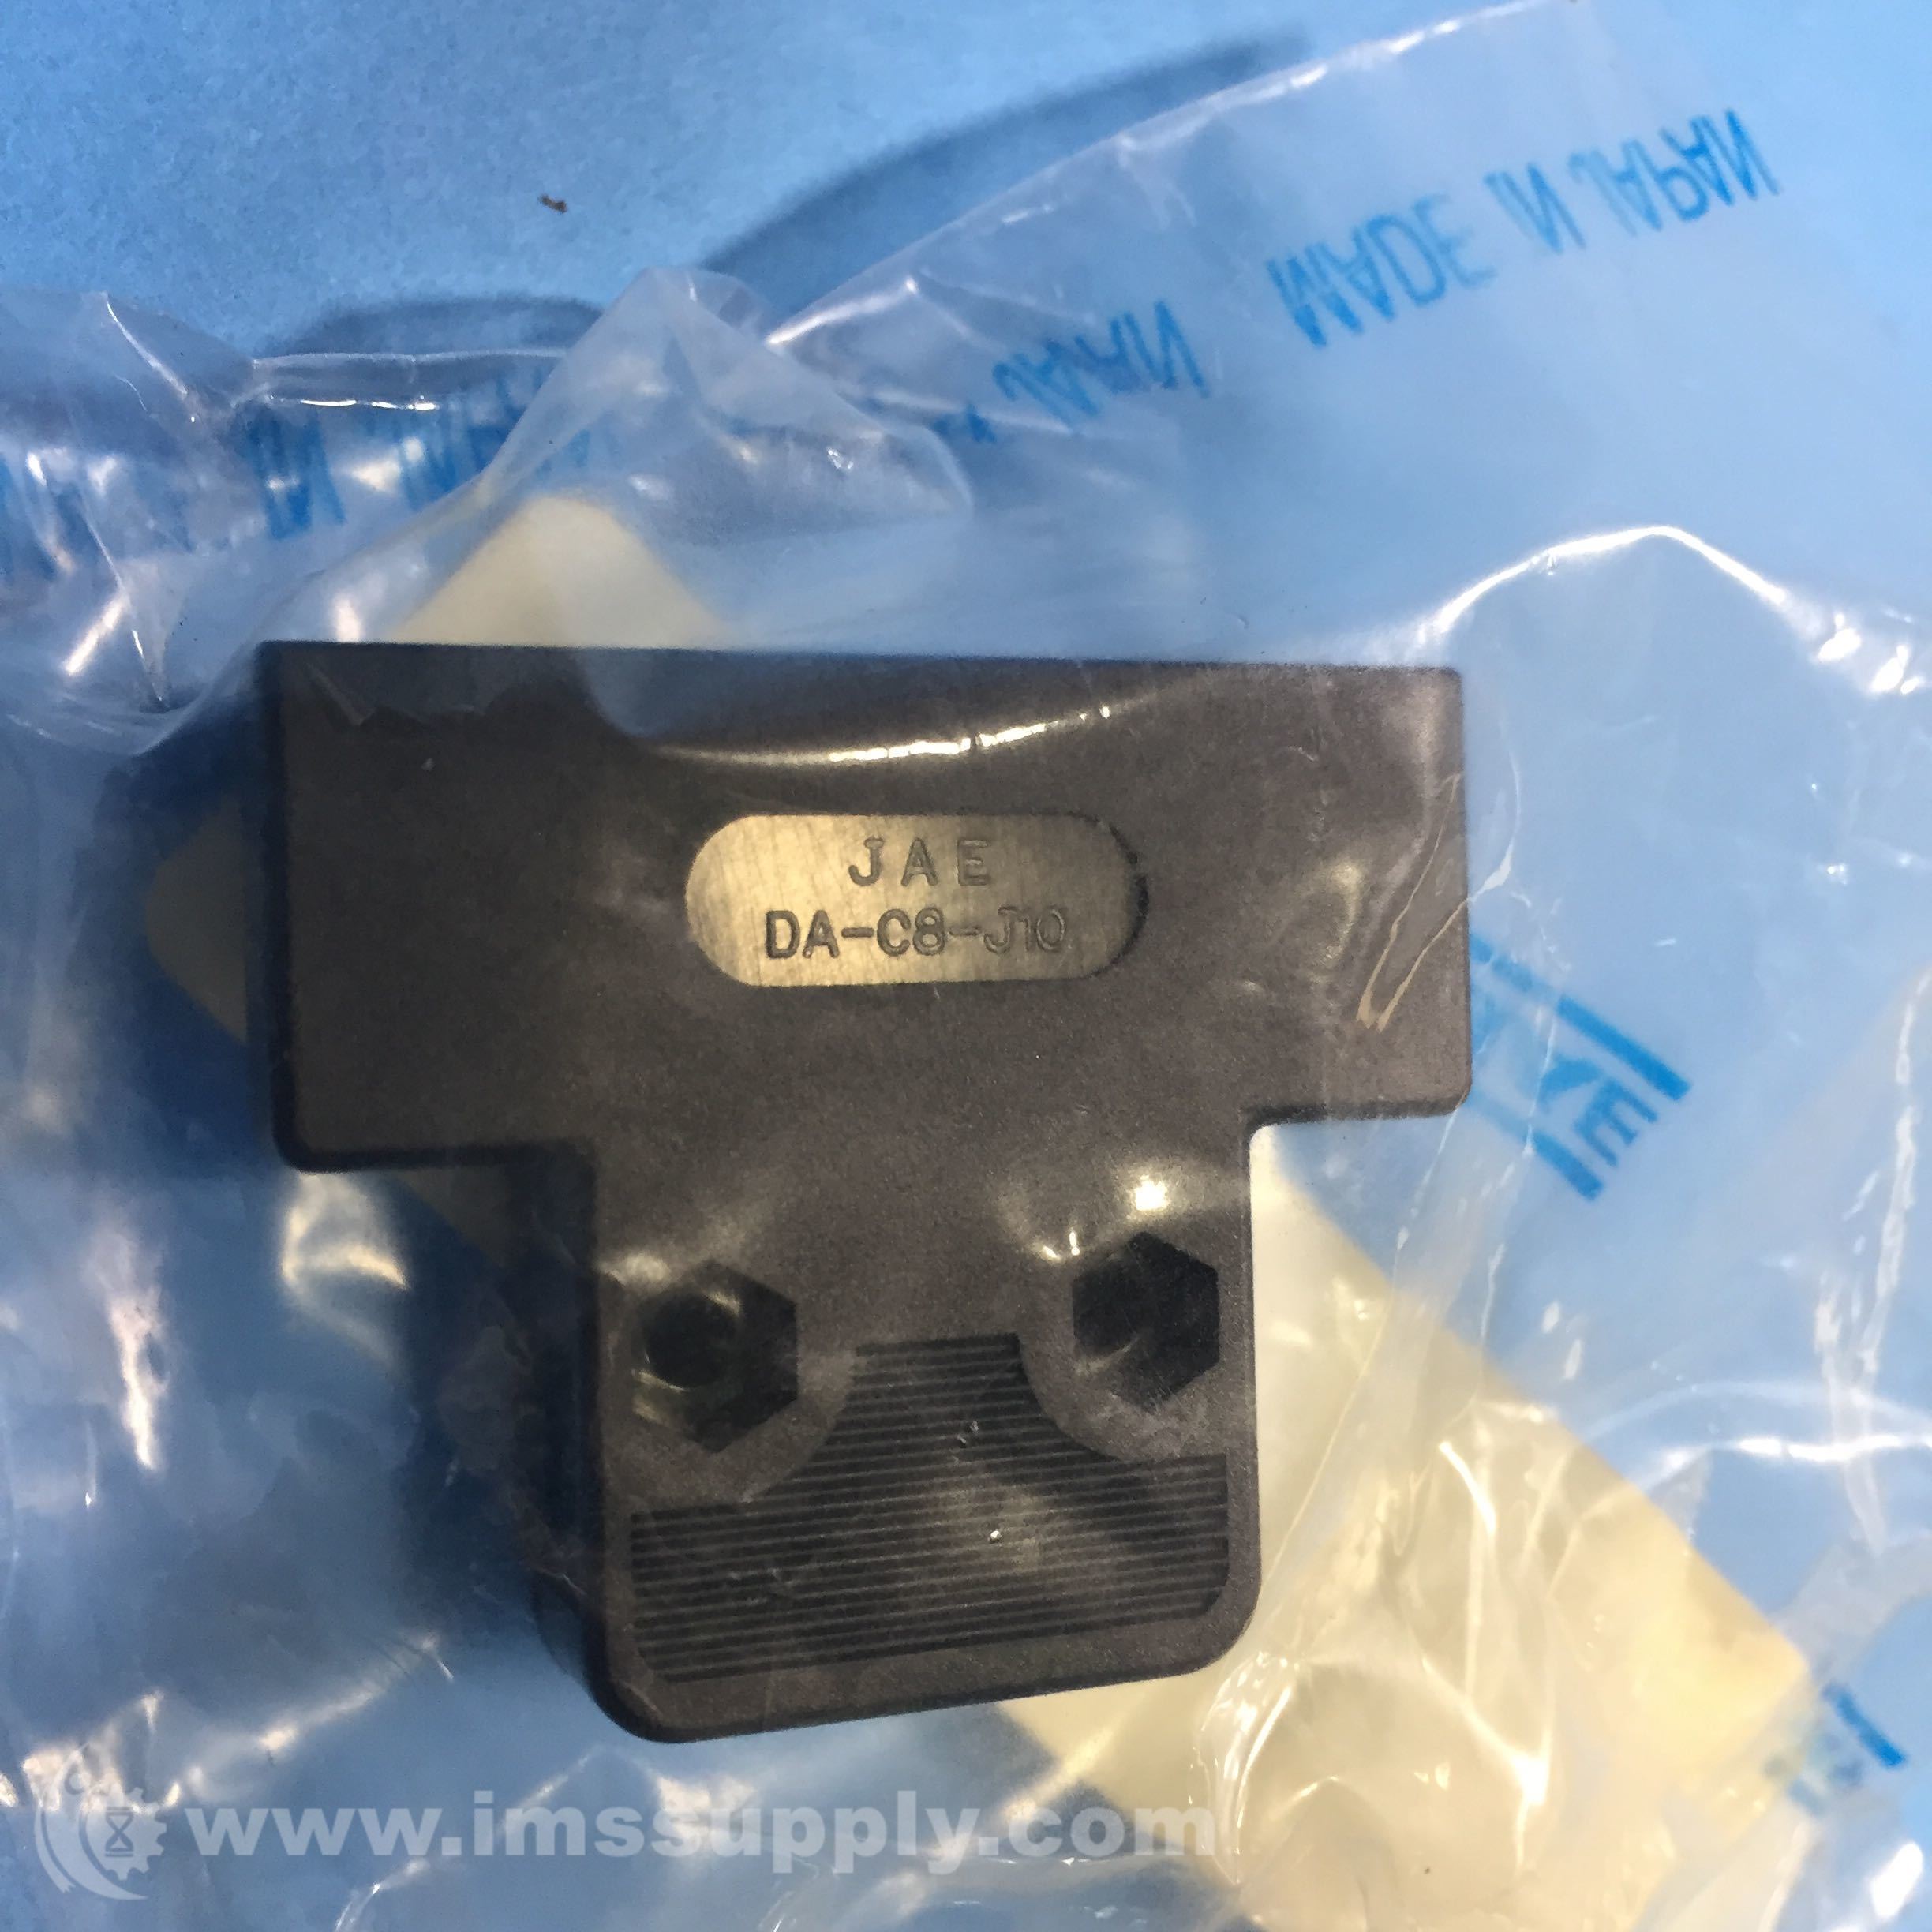 Jae Connectors Da C8 J10 D Sub Connector Plug Ims Supply 